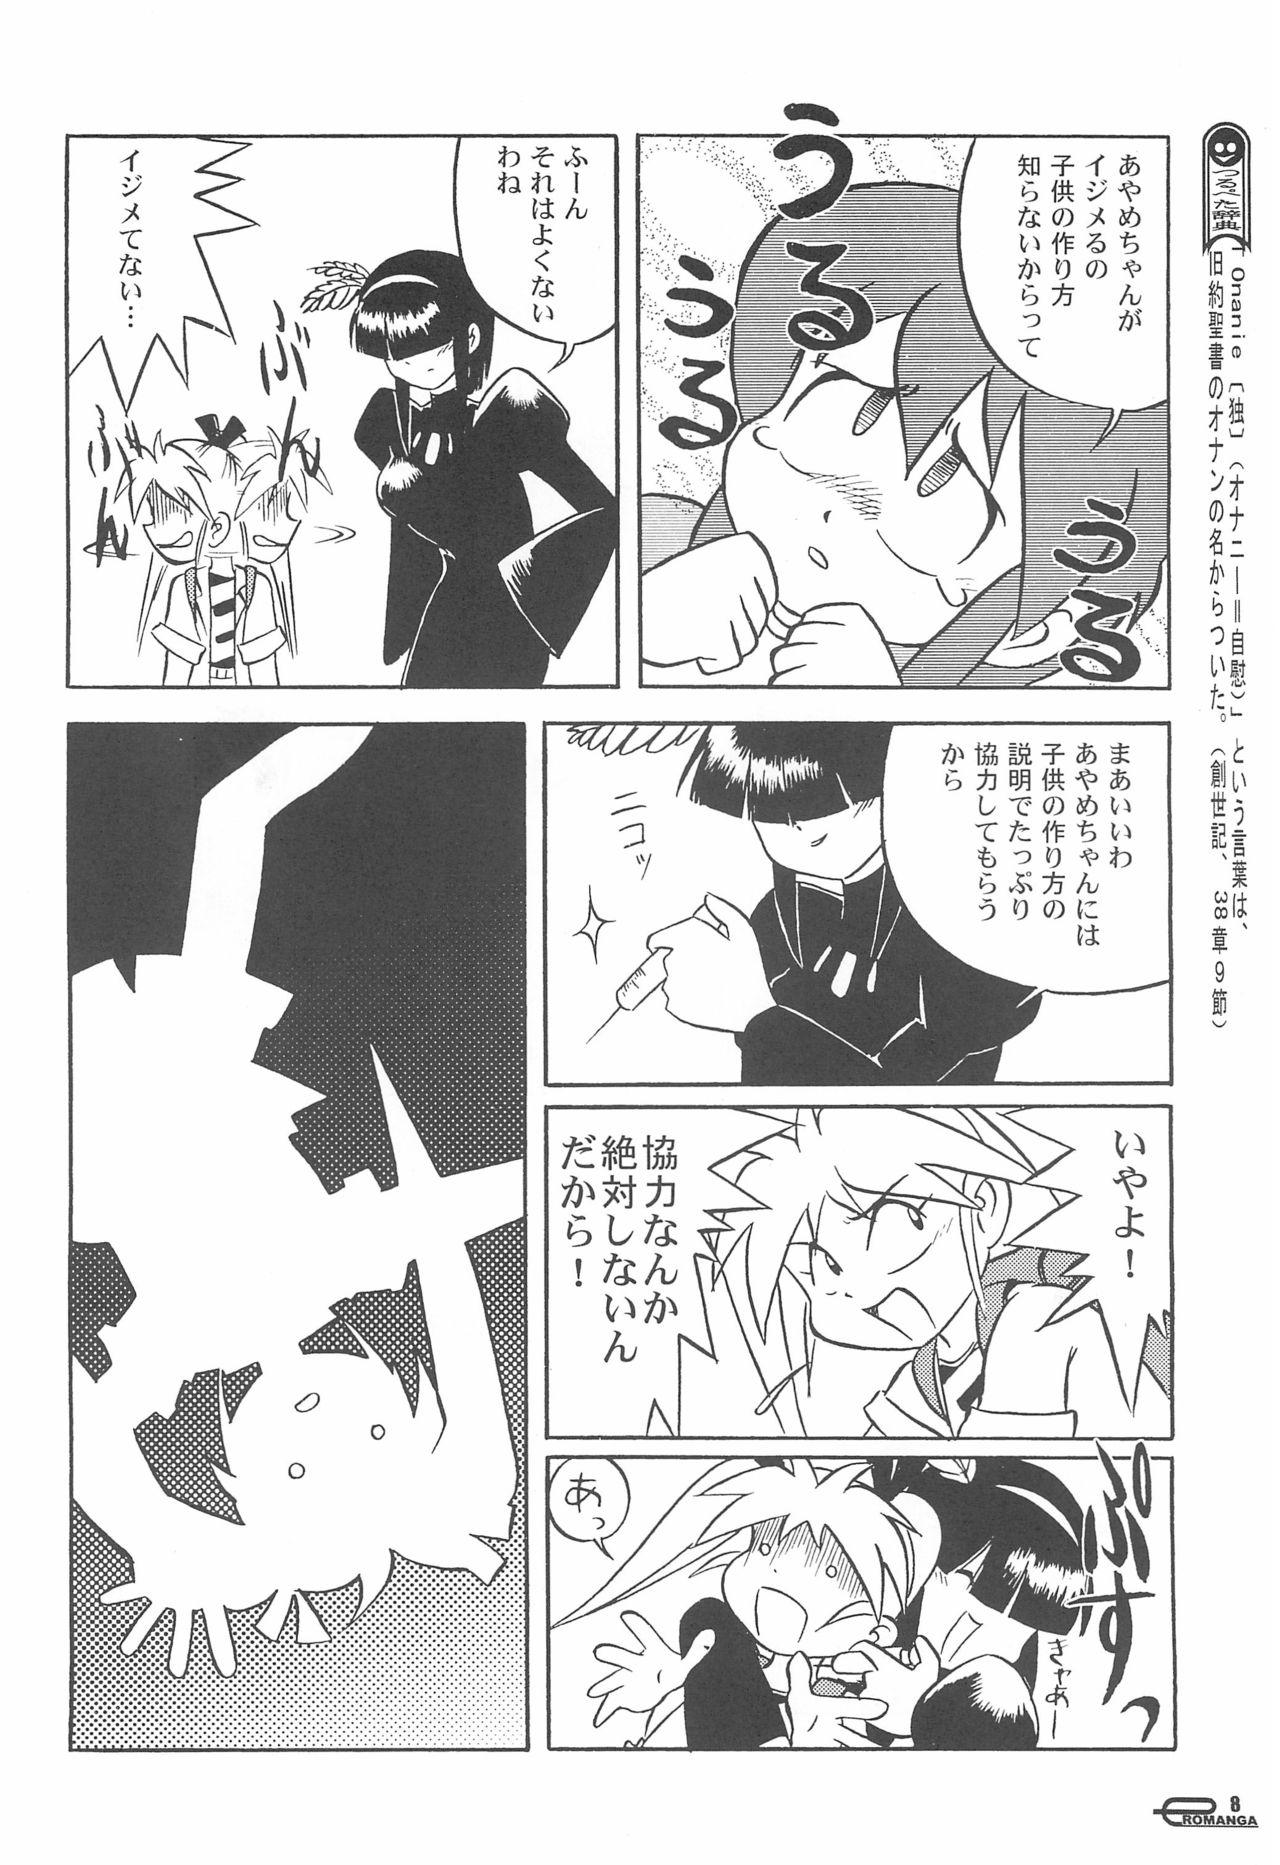 Trannies Manga Science Onna no ko no Himitsu - Manga science Oldman - Page 10